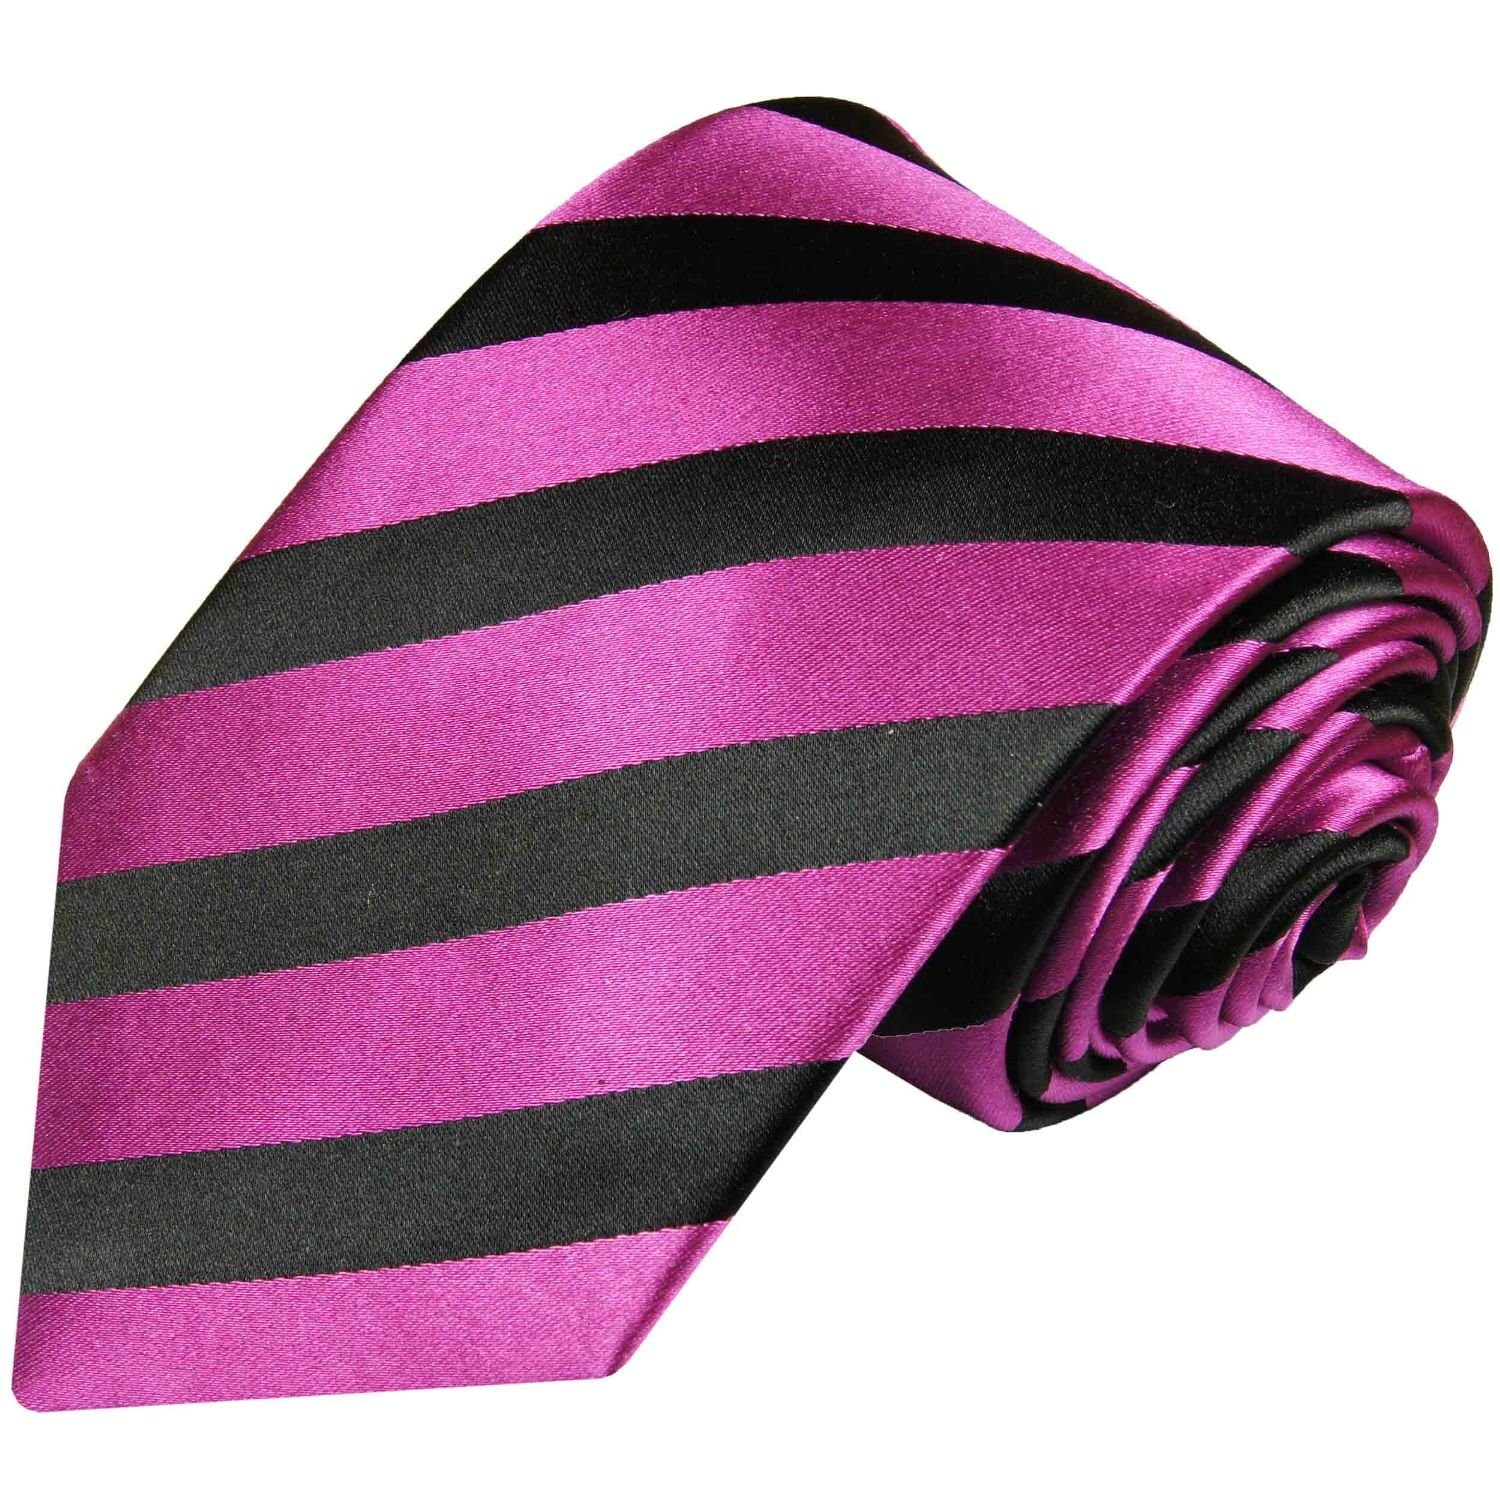 Paul Malone Krawatte Moderne Herren Seidenkrawatte gestreift 100% Seide Breit (8cm), pink schwarz 381